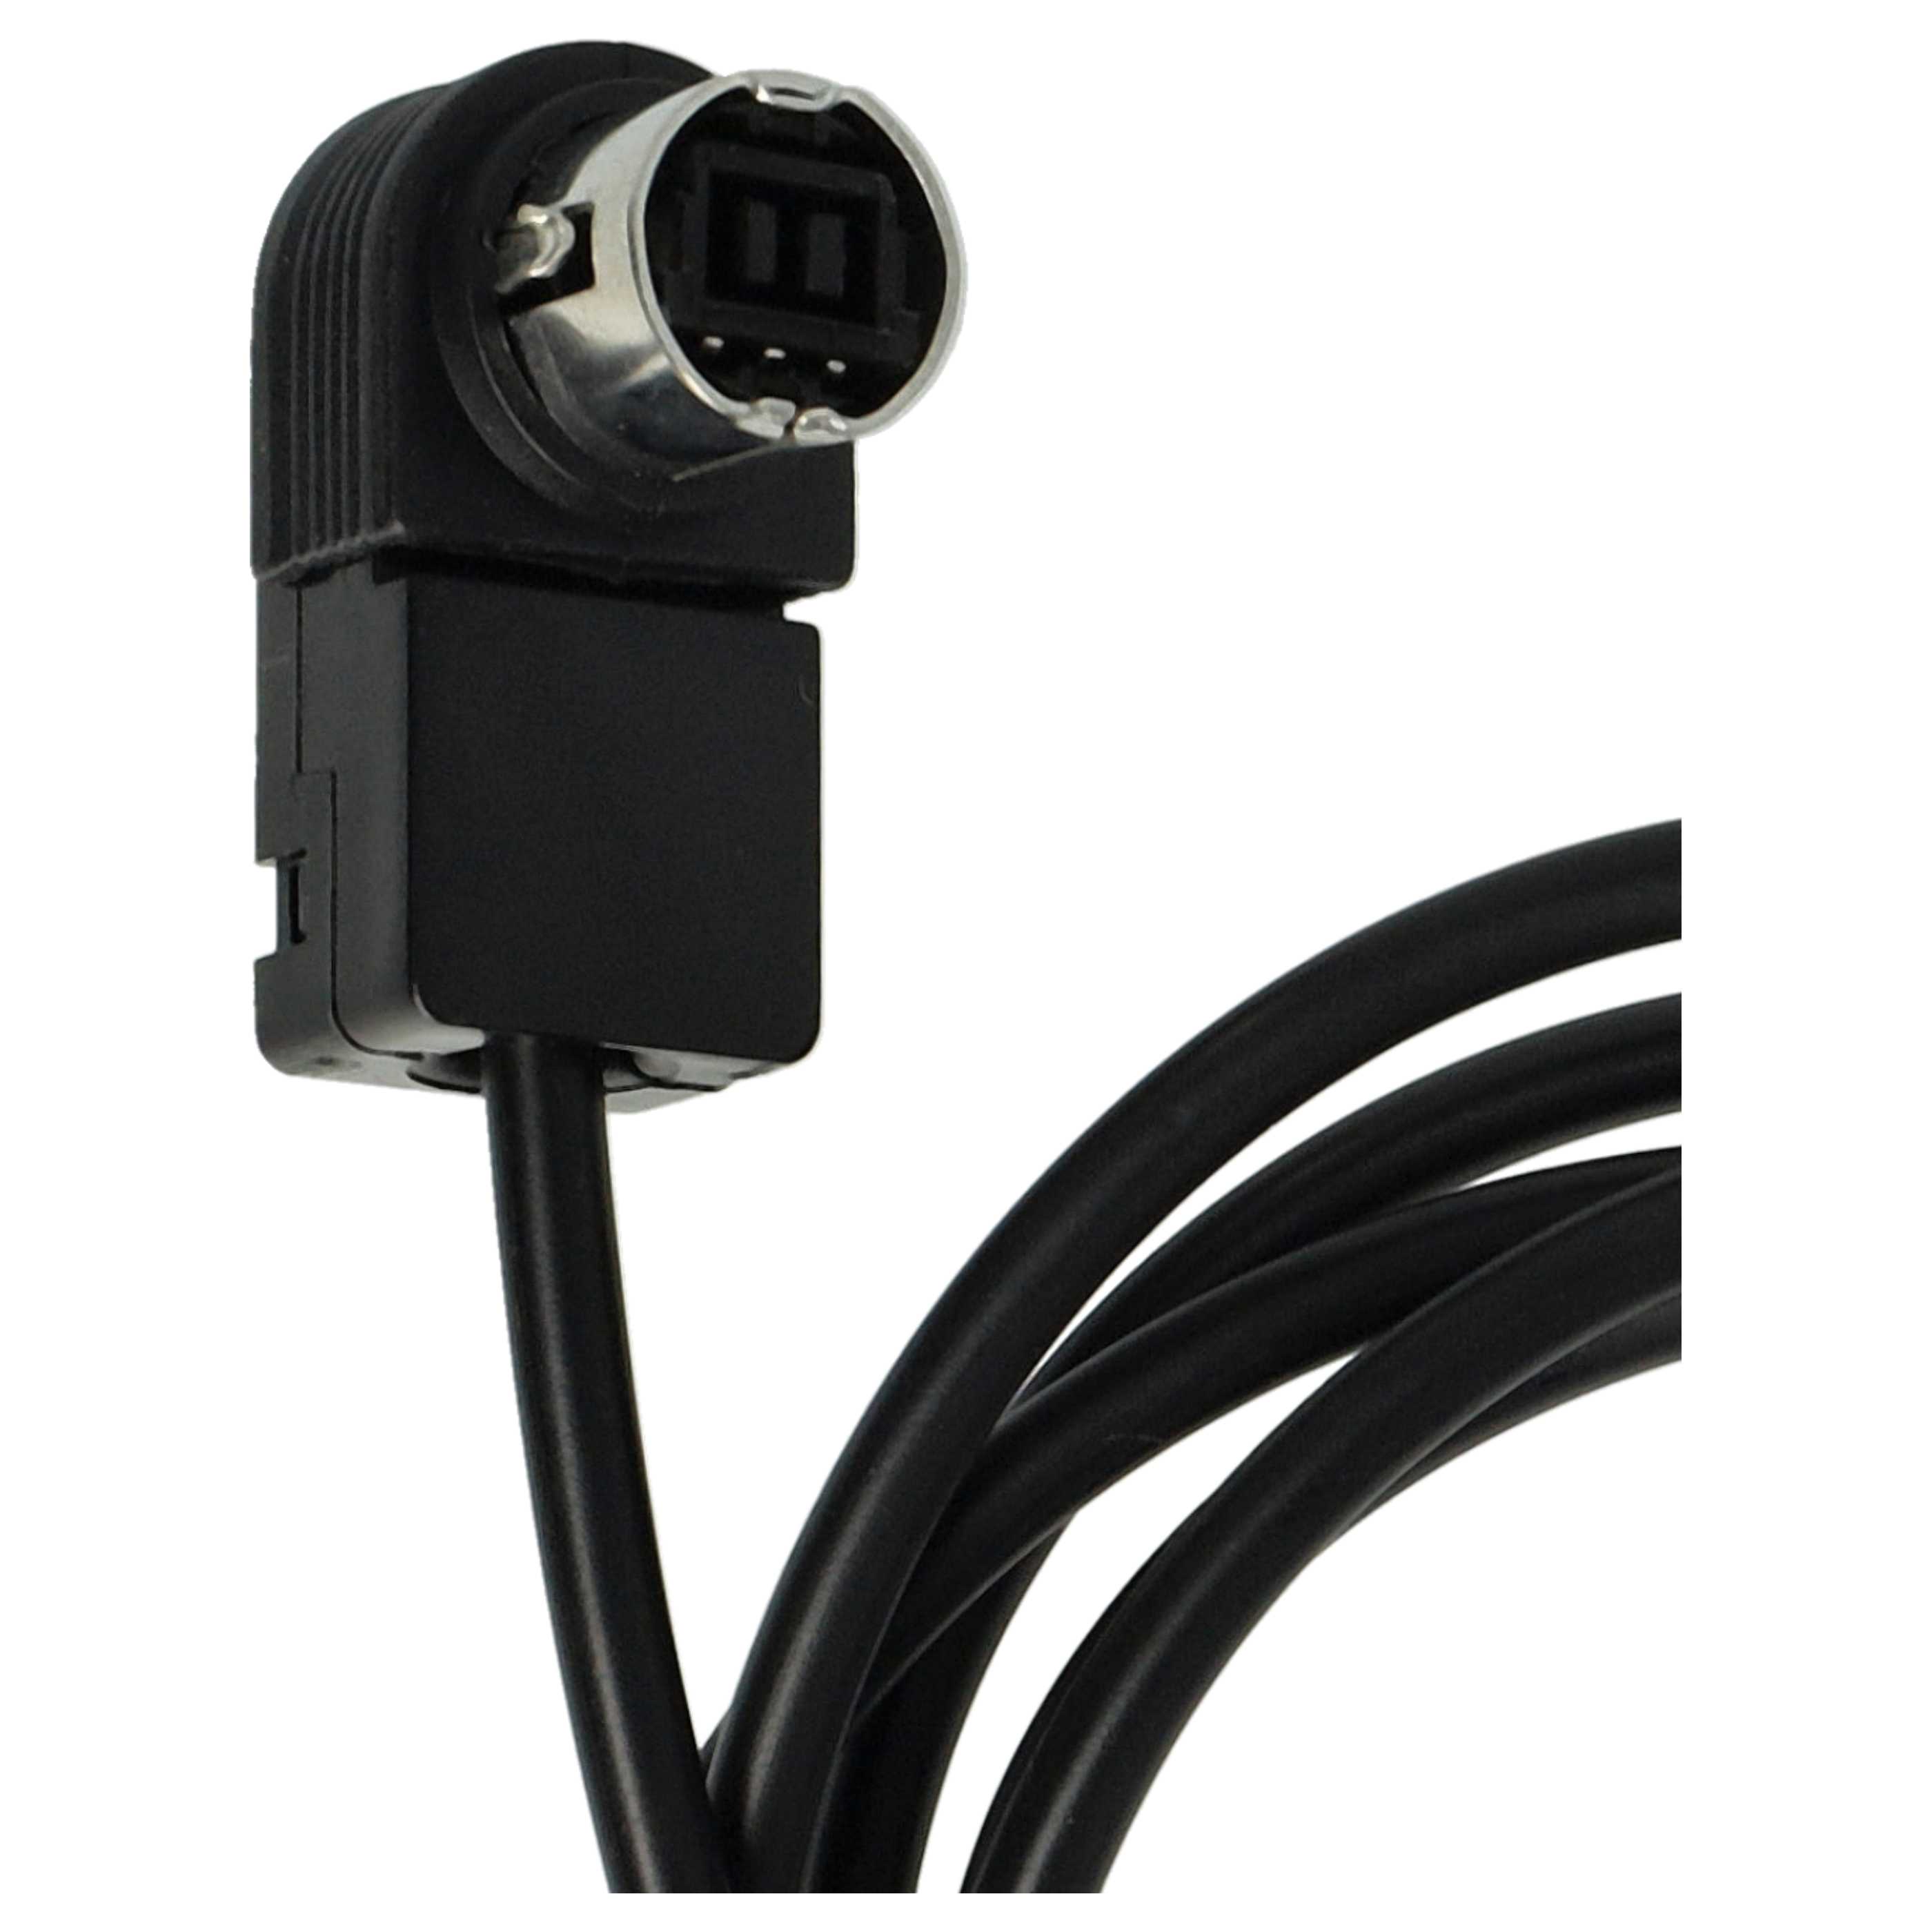 AUX Audio Adapter Kabel als Ersatz für JVC KS-U58 Auto Radio